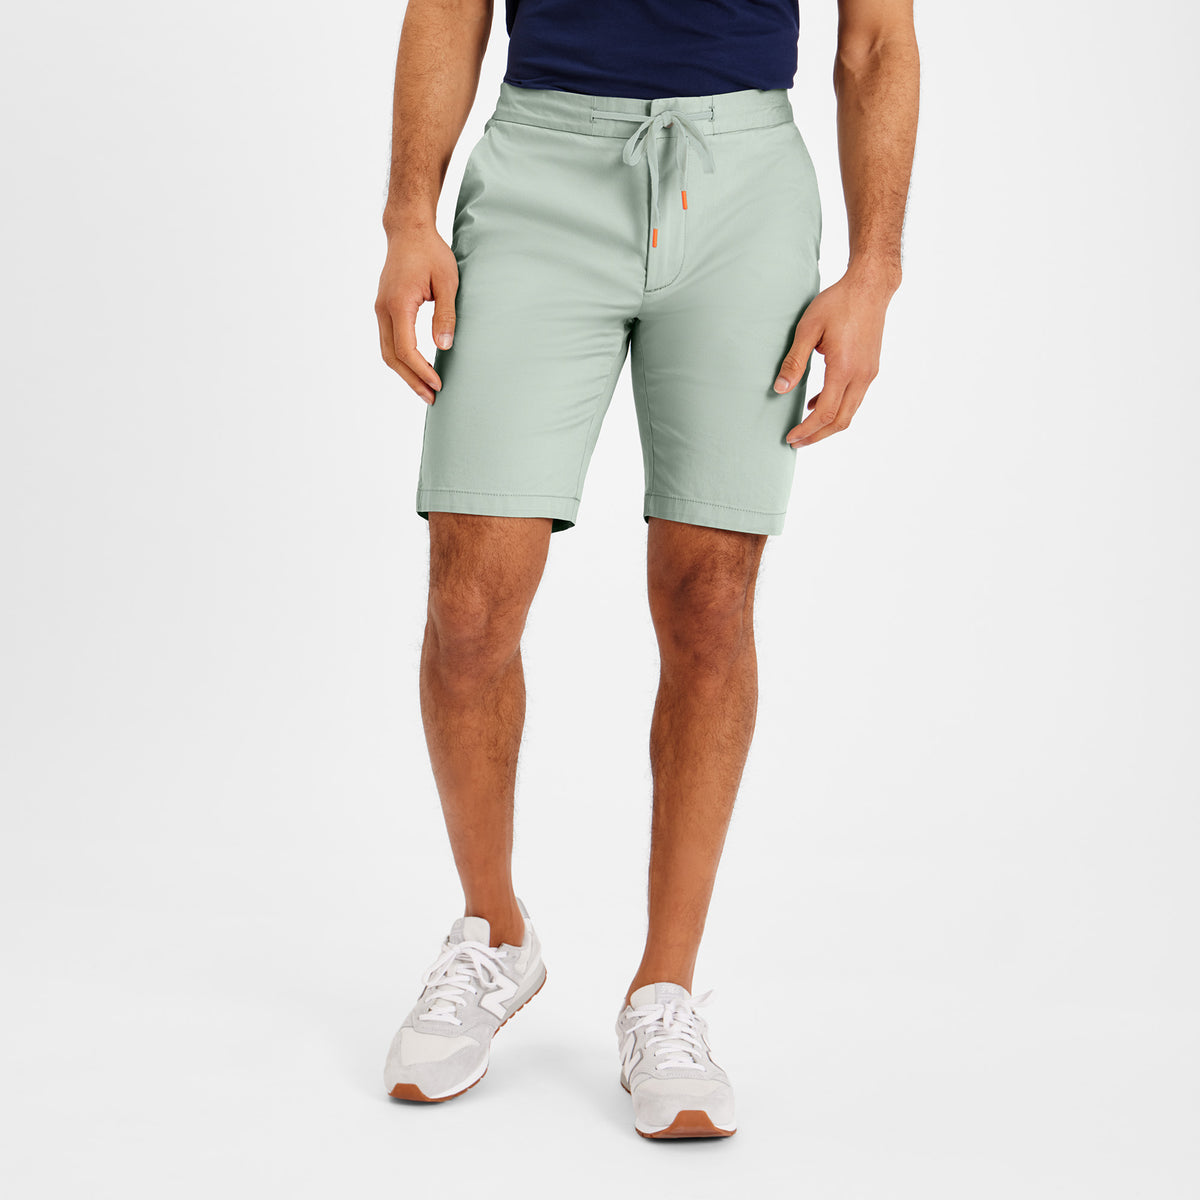 SPOKE Friday Shorts - Aqua Grey Custom Fit Shorts - SPOKE